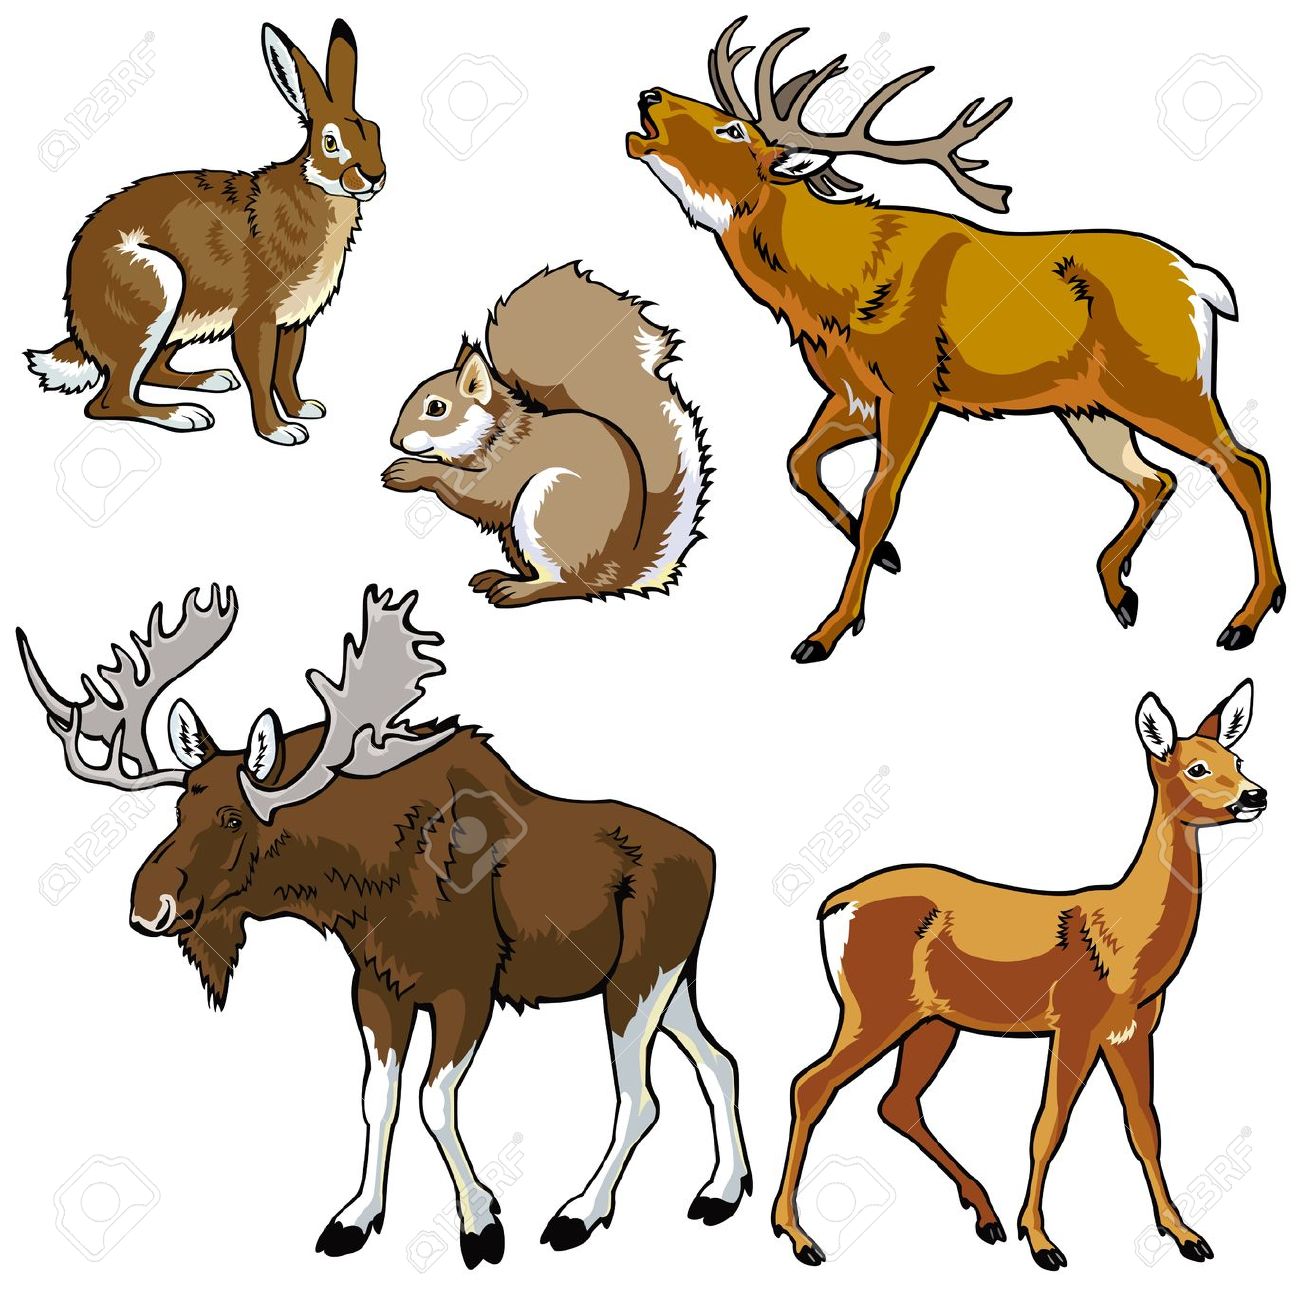 Elk clipart #3, Download drawings